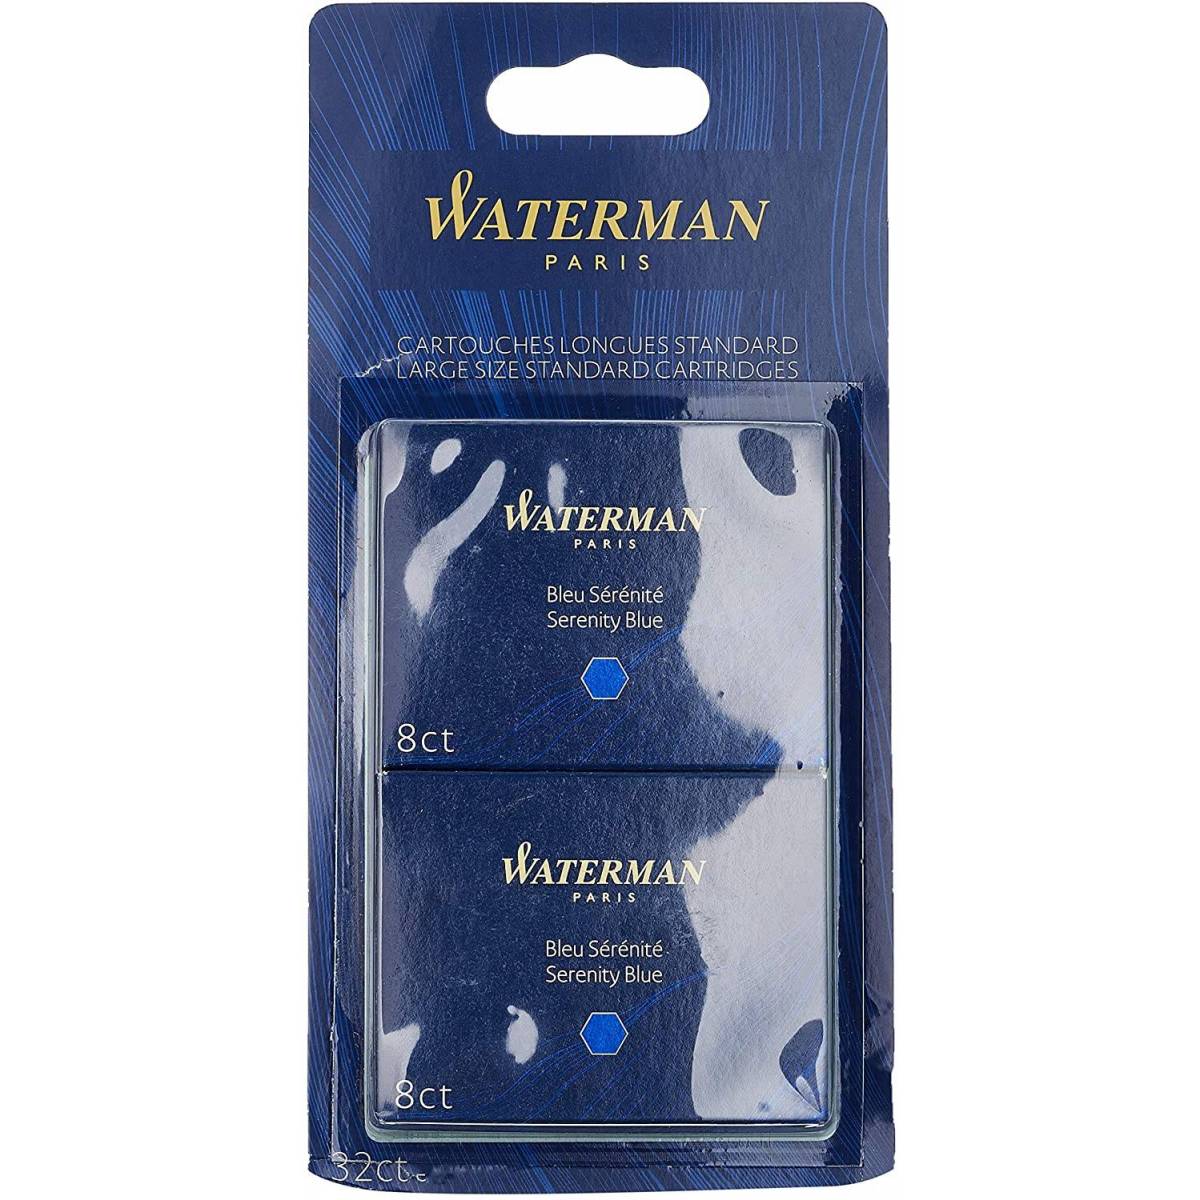 Waterman 32 Cartouches Longues pour Stylo Plume encre Bleu - MaxxiDiscount